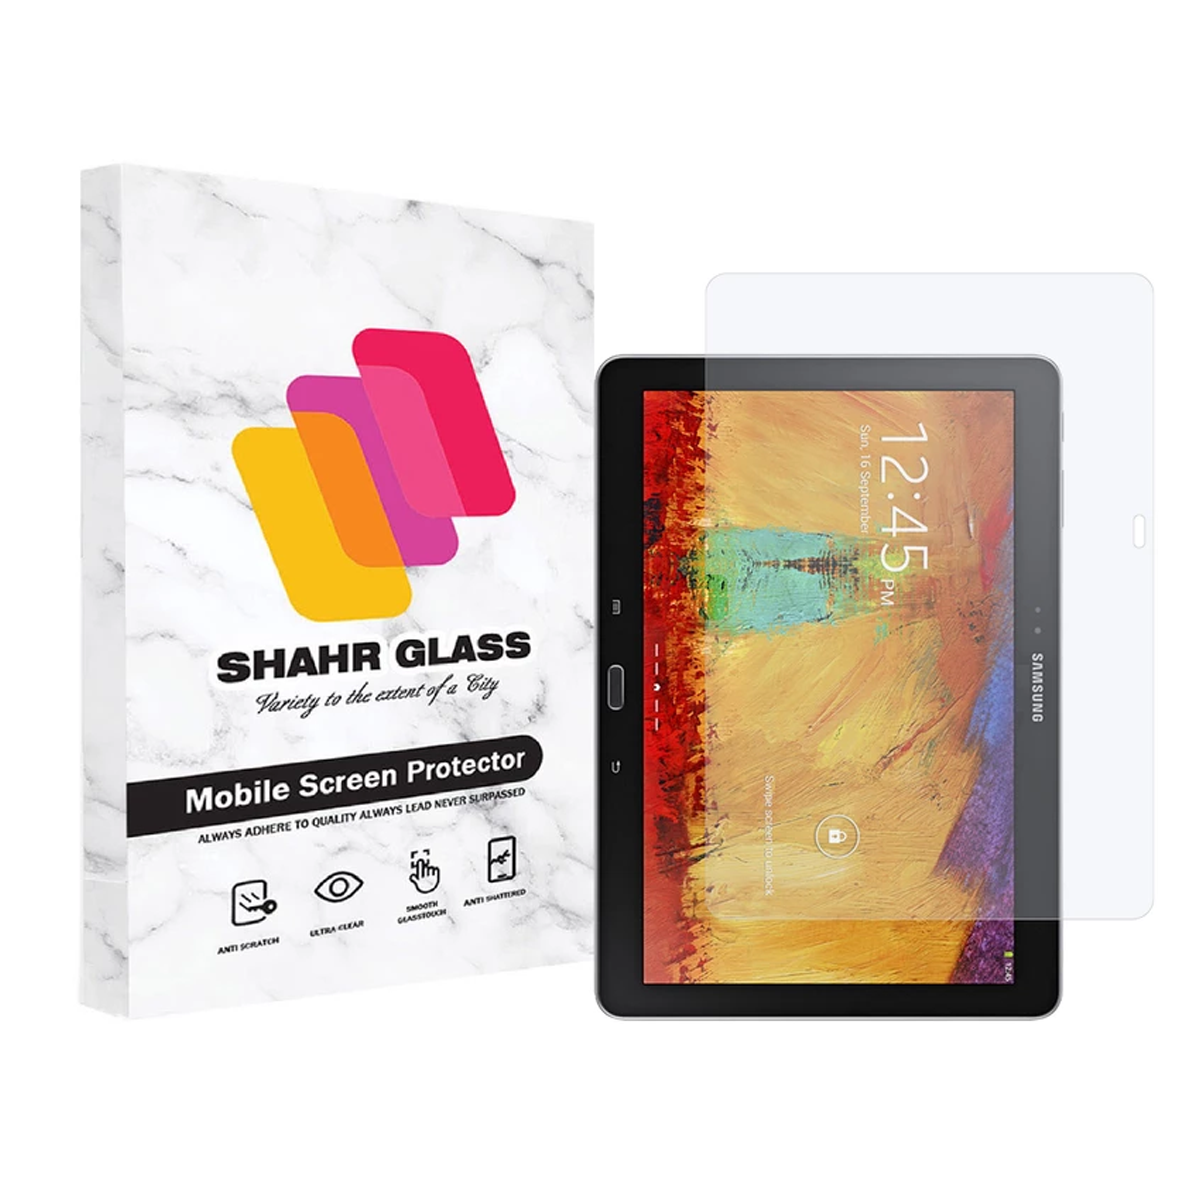 گلس تبلت سامسونگ Galaxy Note 10.1 2014 شهر گلس مدل SMPT2 -بی رنگ شفاف